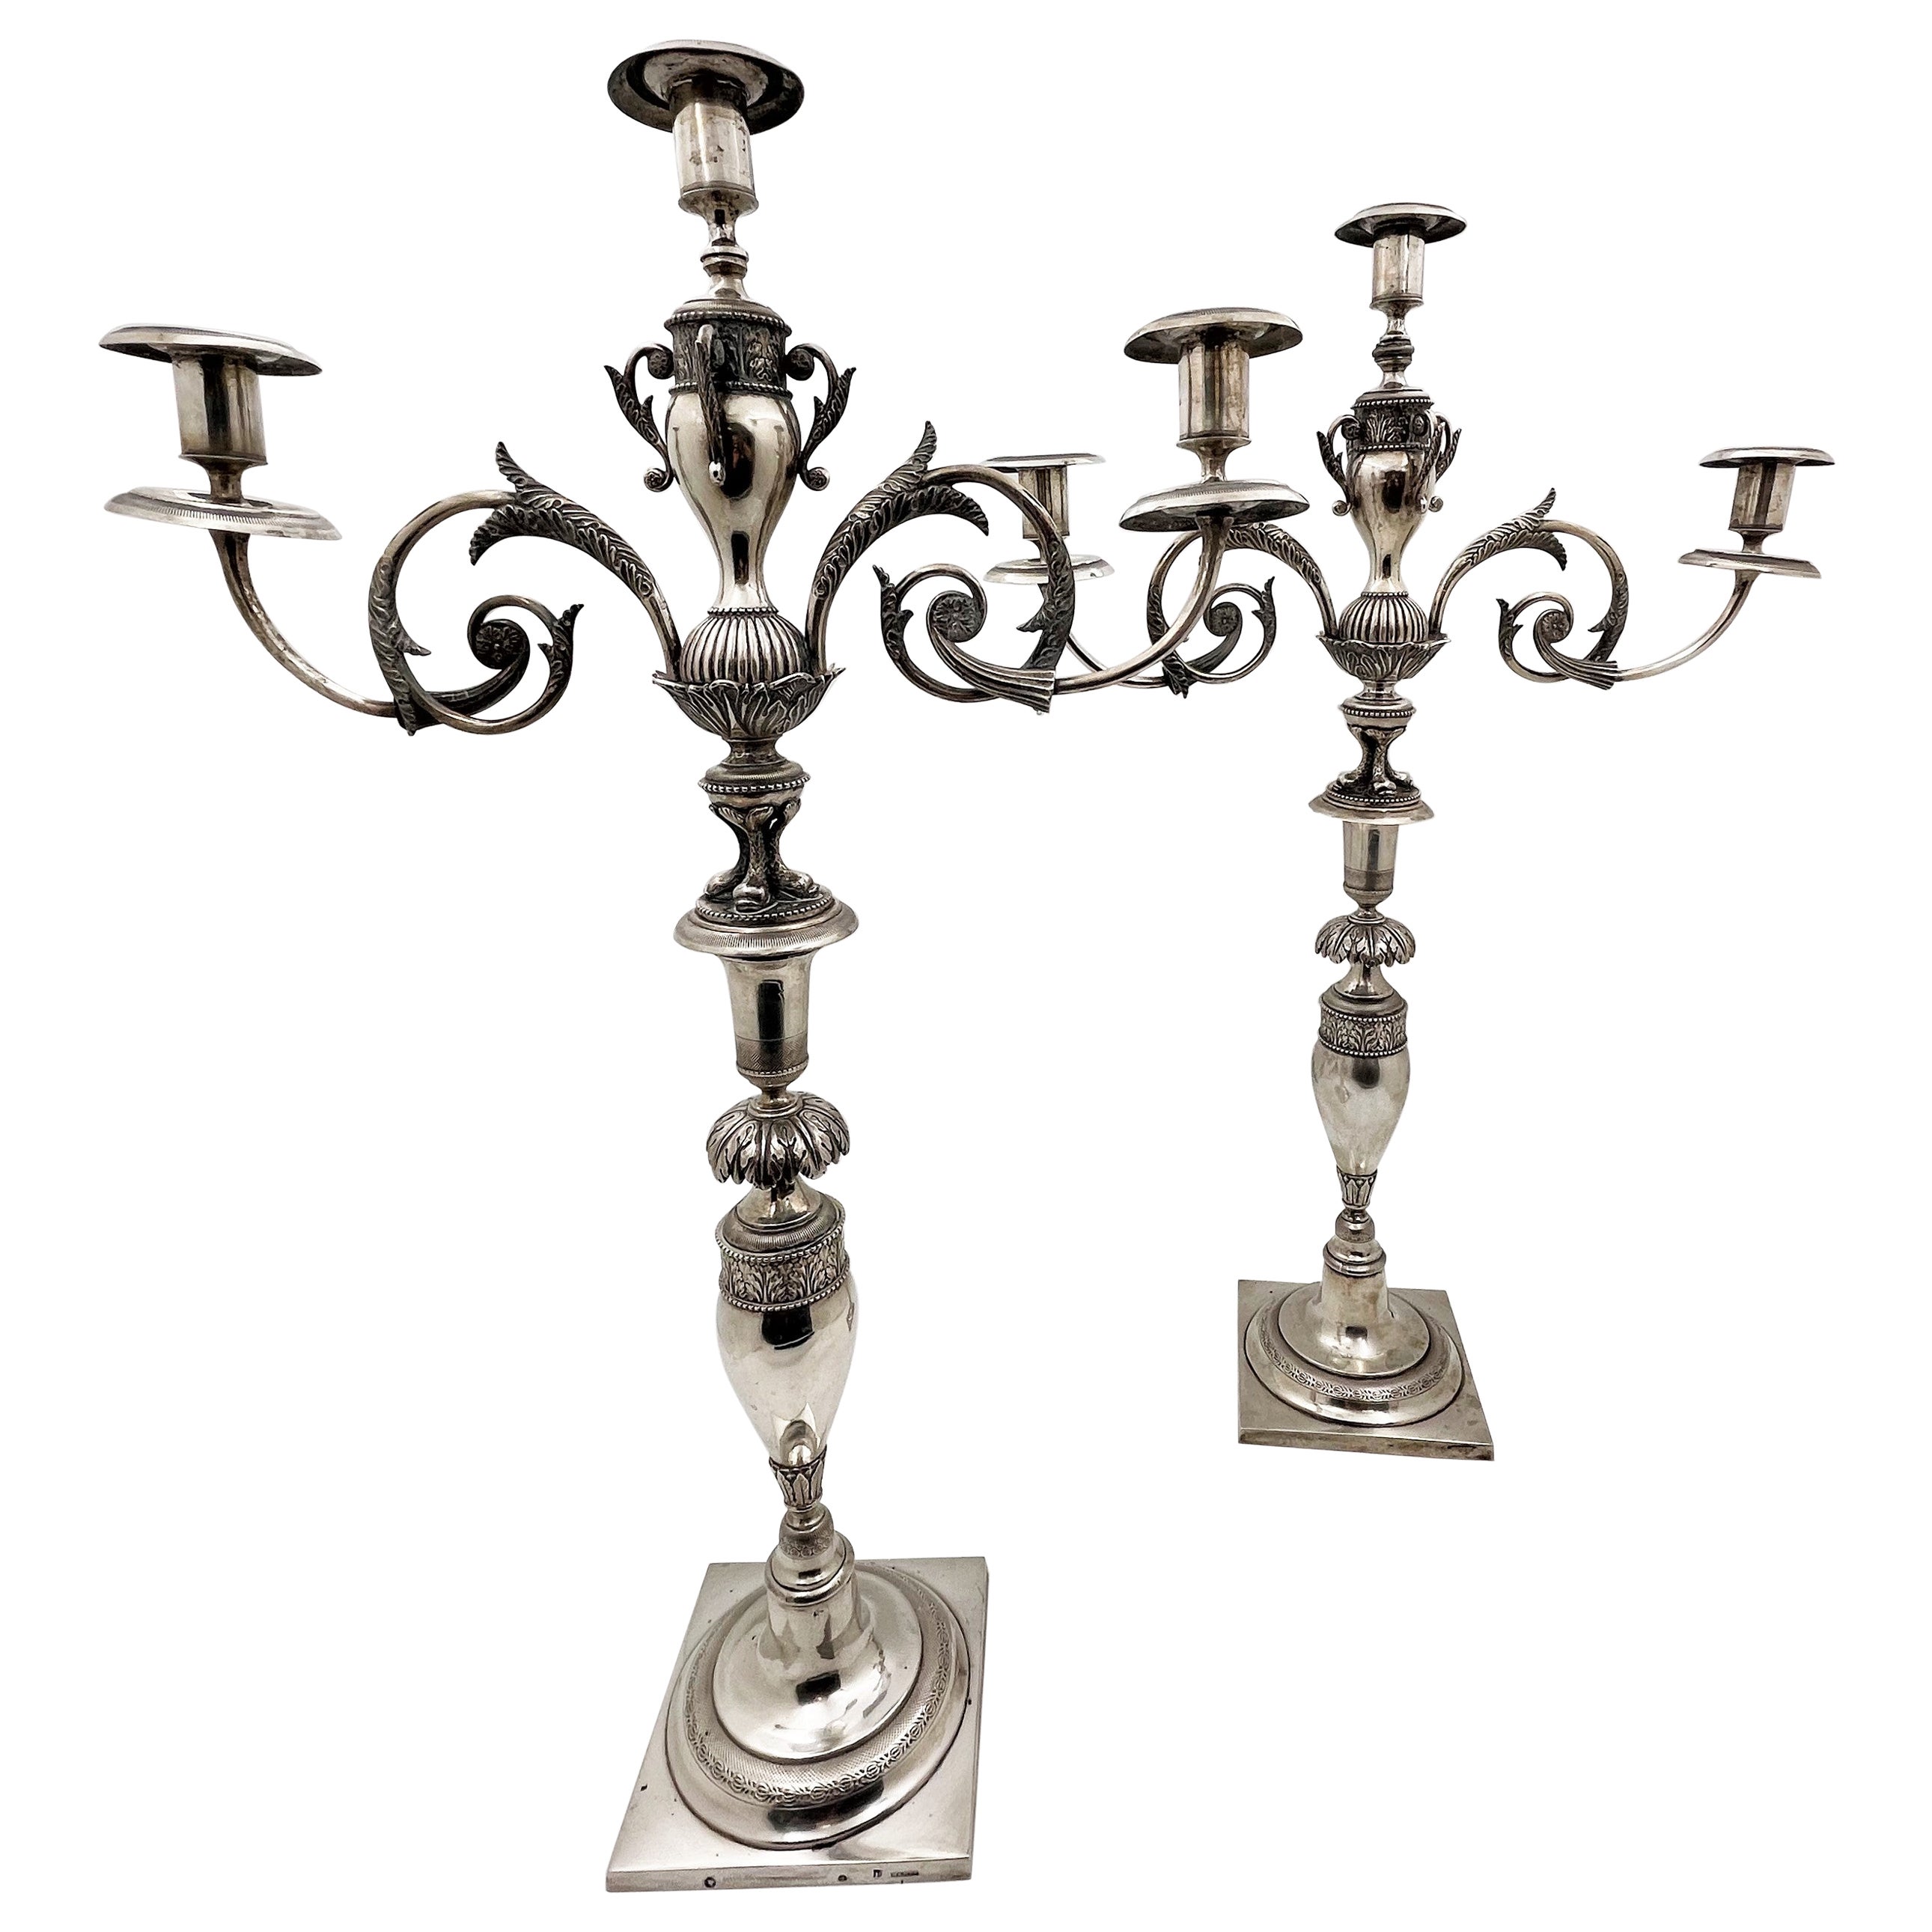 Pair of 18th Century German Silver 3-Light Monumental Candelabra